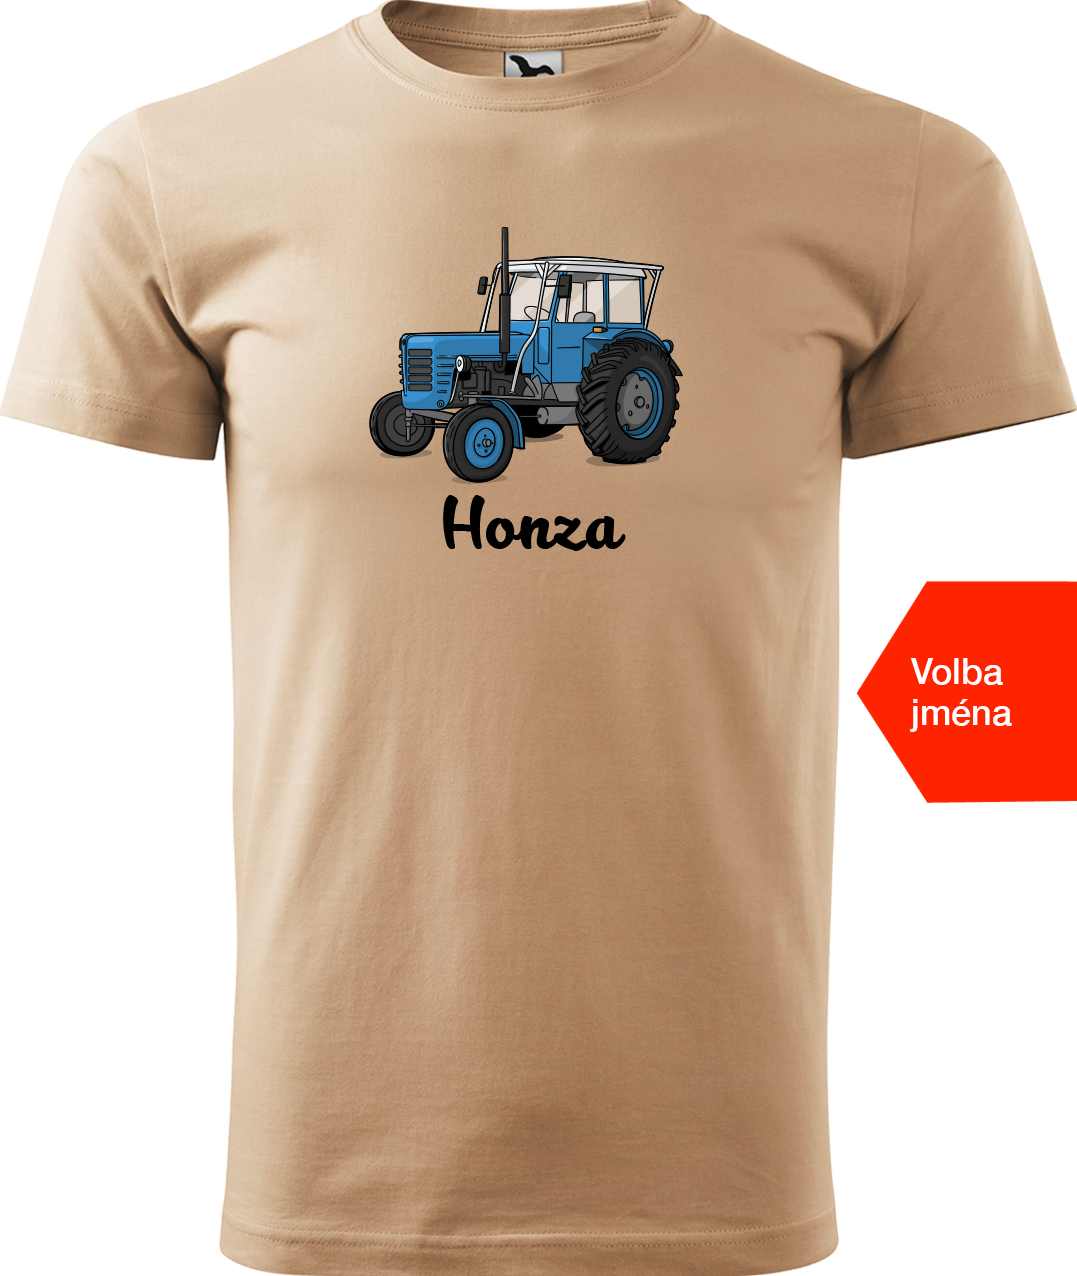 Tričko s traktorem a jménem - Starý traktor Velikost: L, Barva: Písková (08)